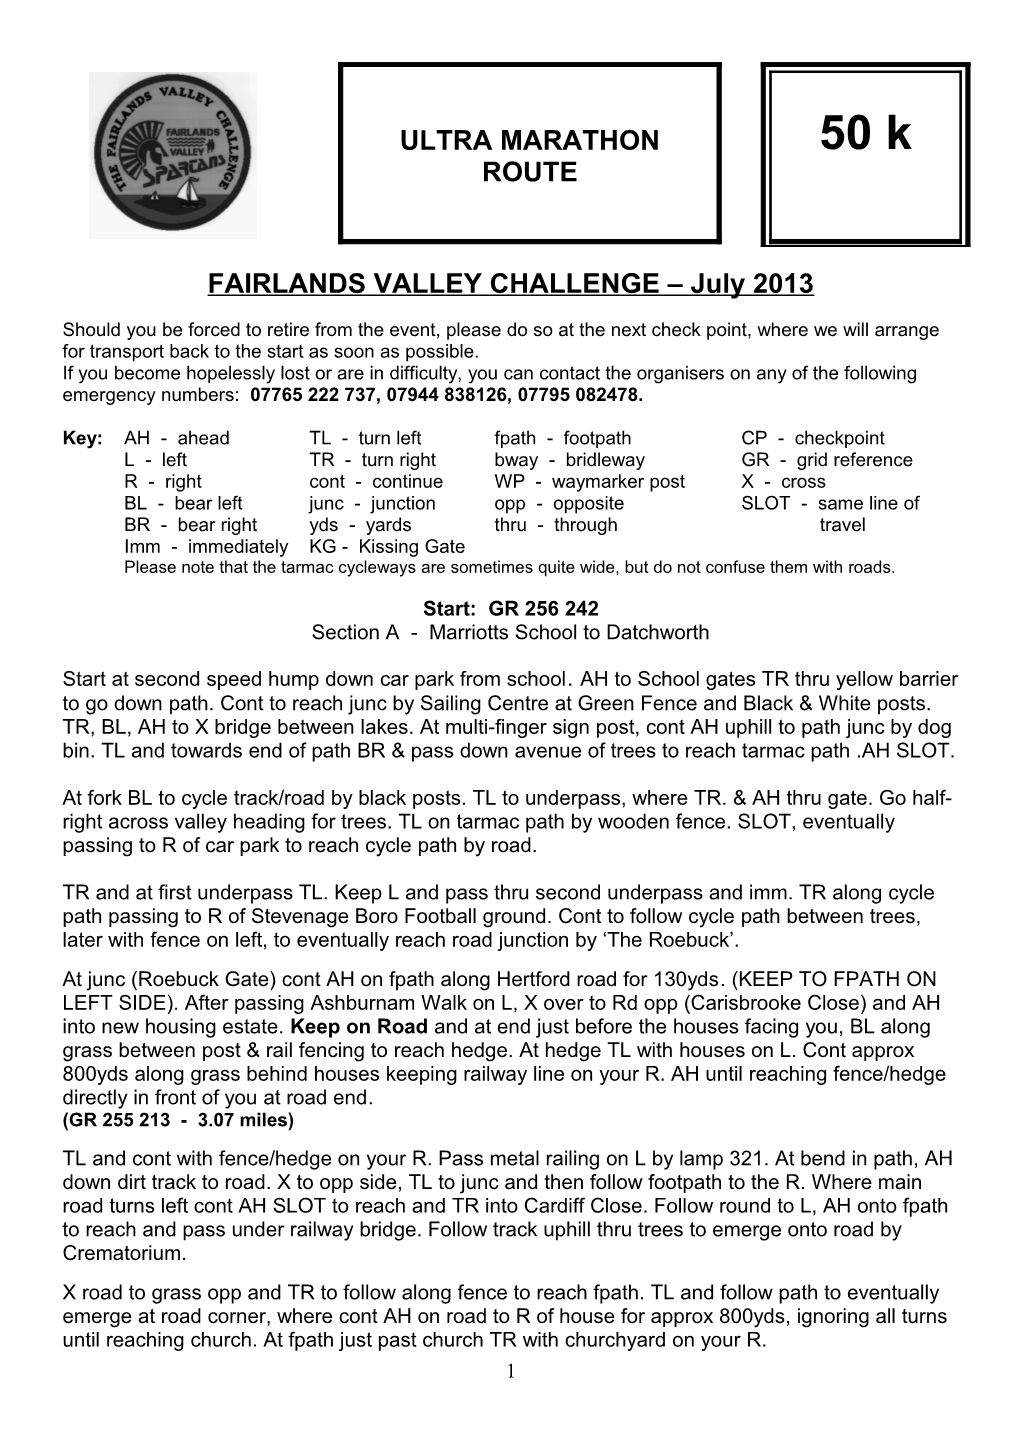 FAIRLANDS VALLEY CHALLENGE July 2013